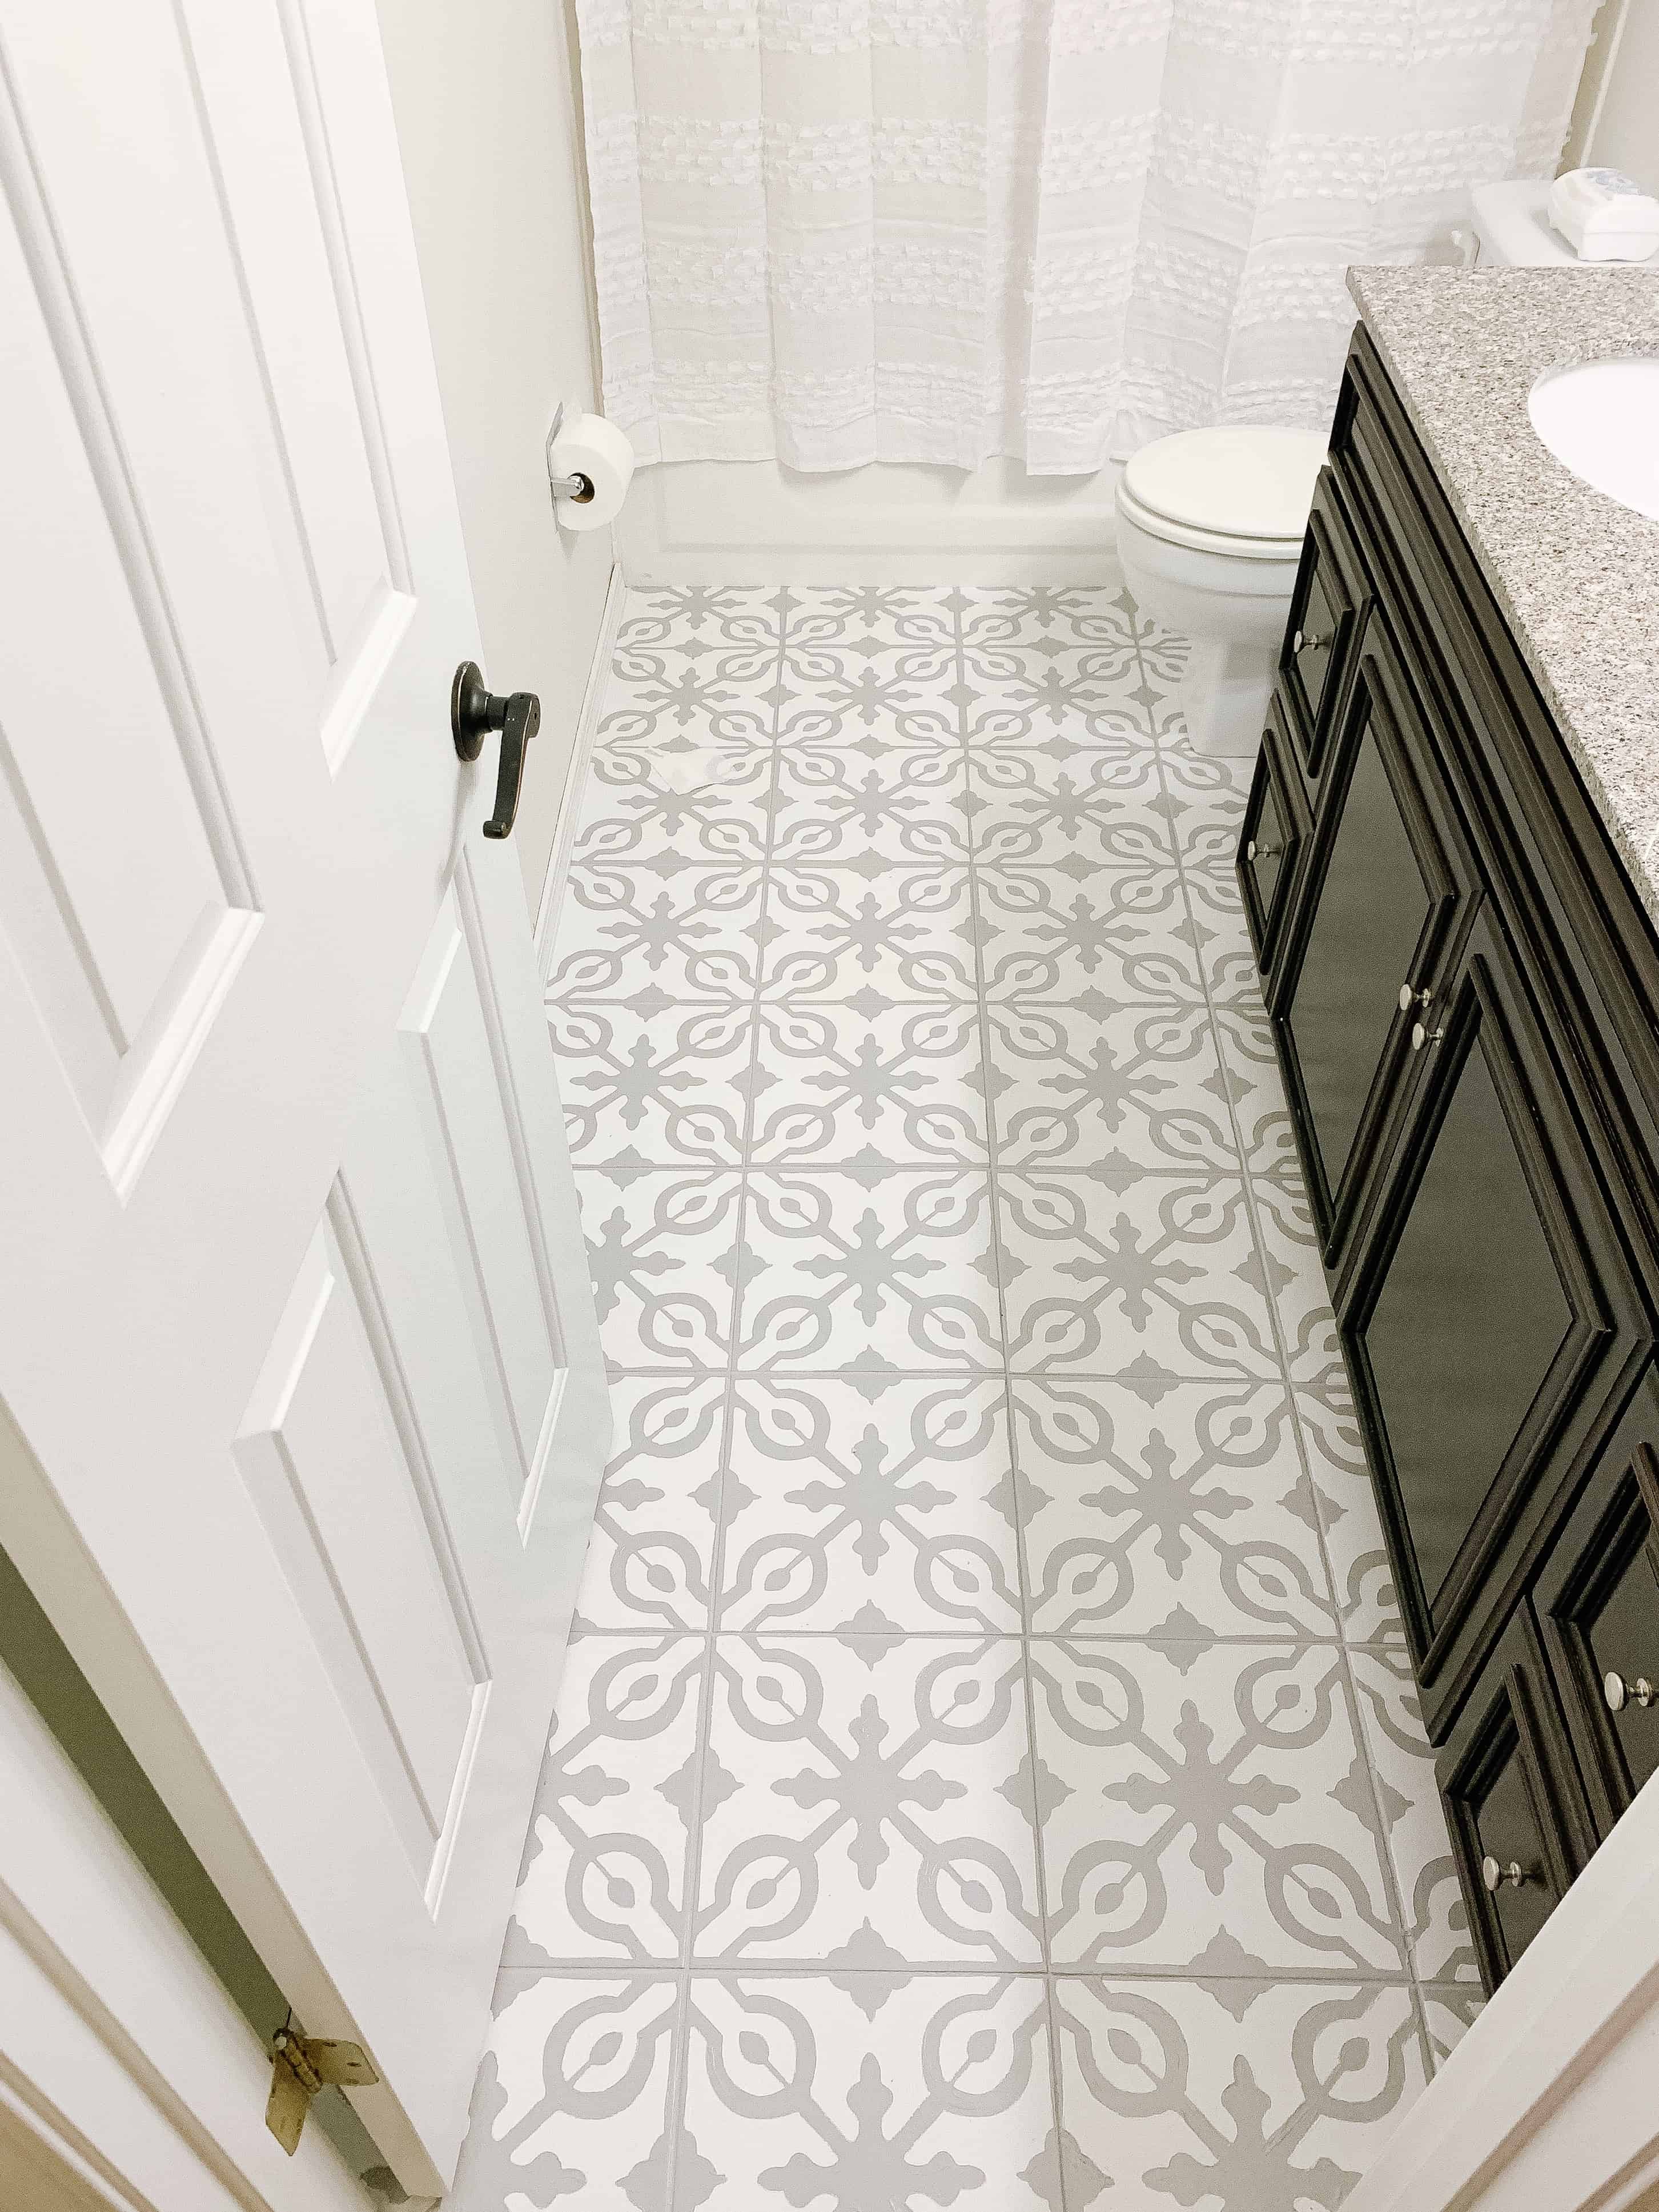 How To Paint Tile Floors, Painting Bathroom Tile